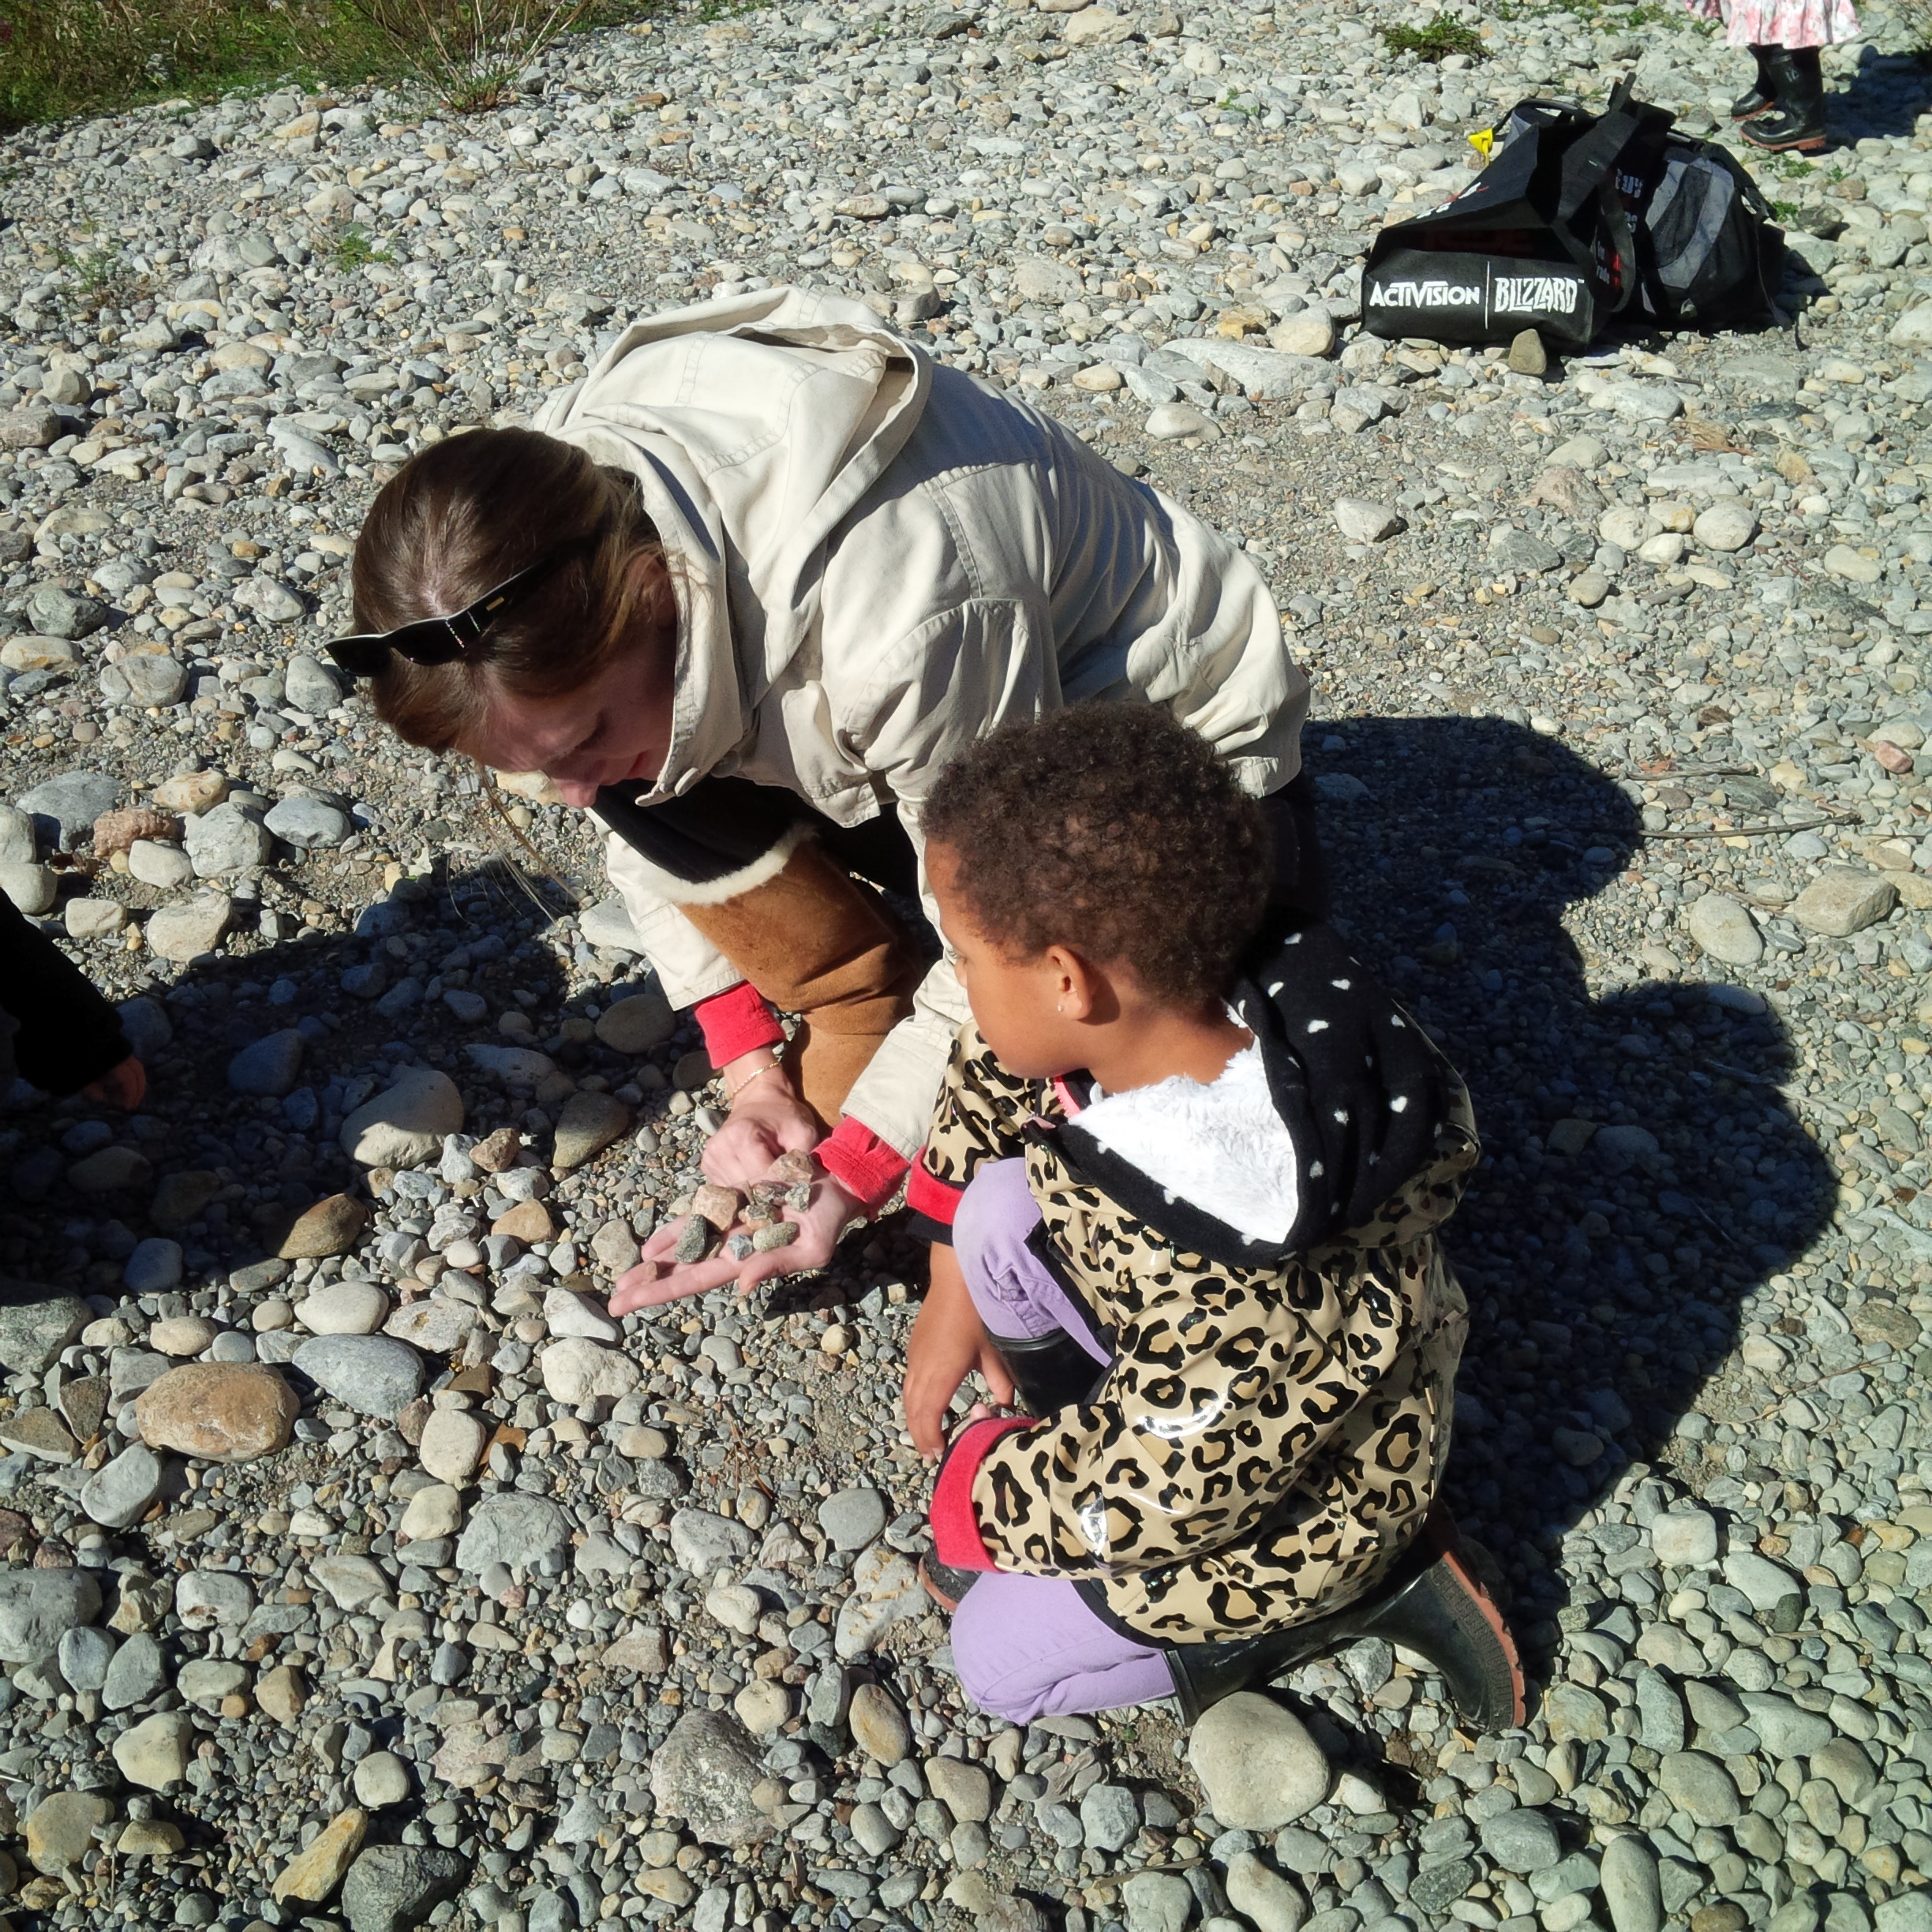 Inspecting Rocks